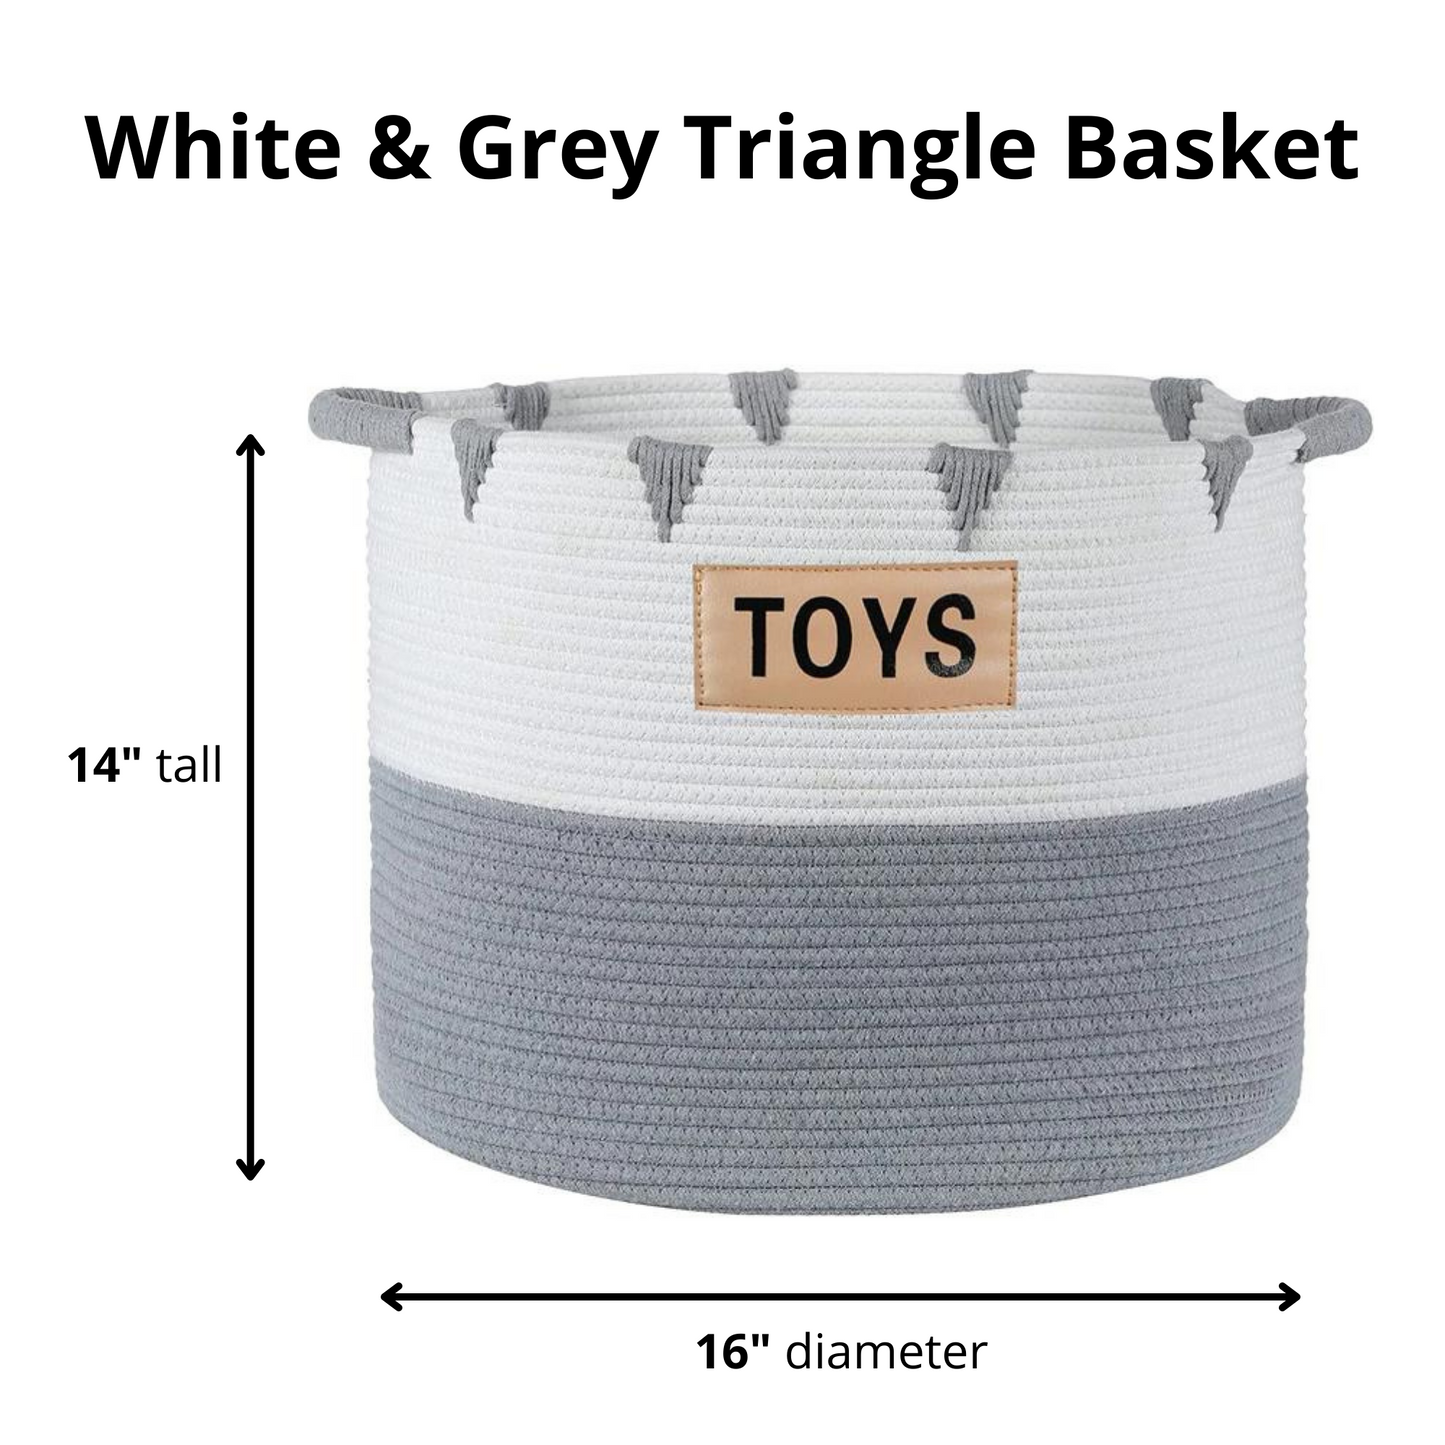 Midlee White & Grey Triangle Toys Basket